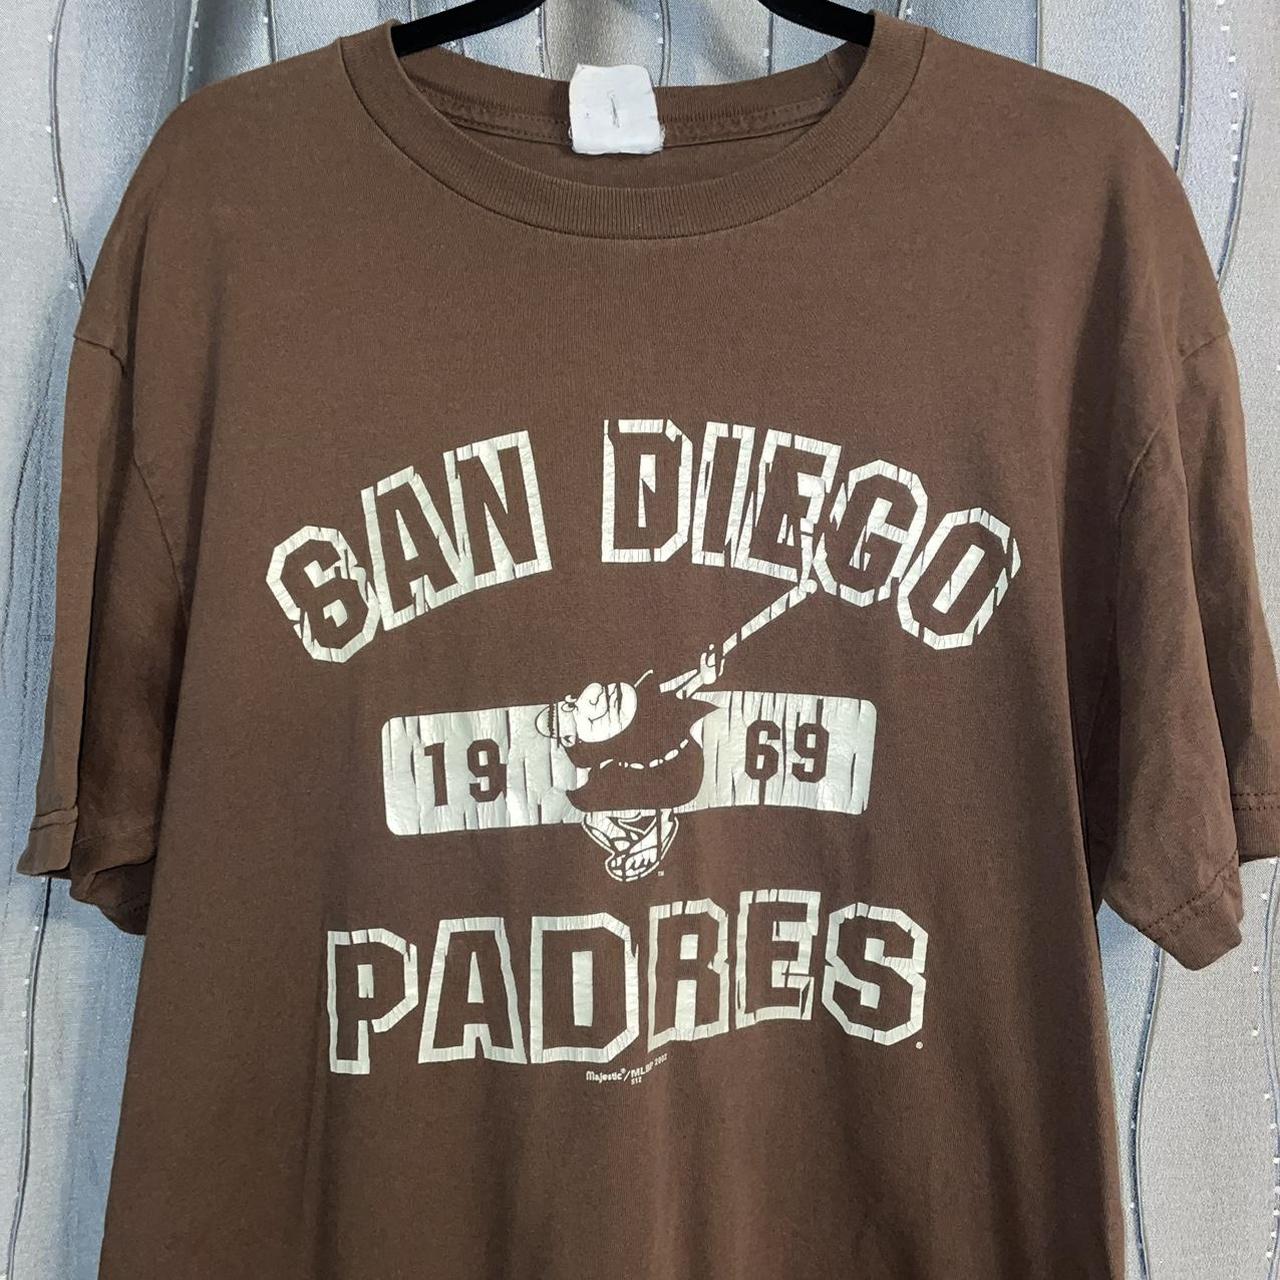 Vintage Padres Shirt 